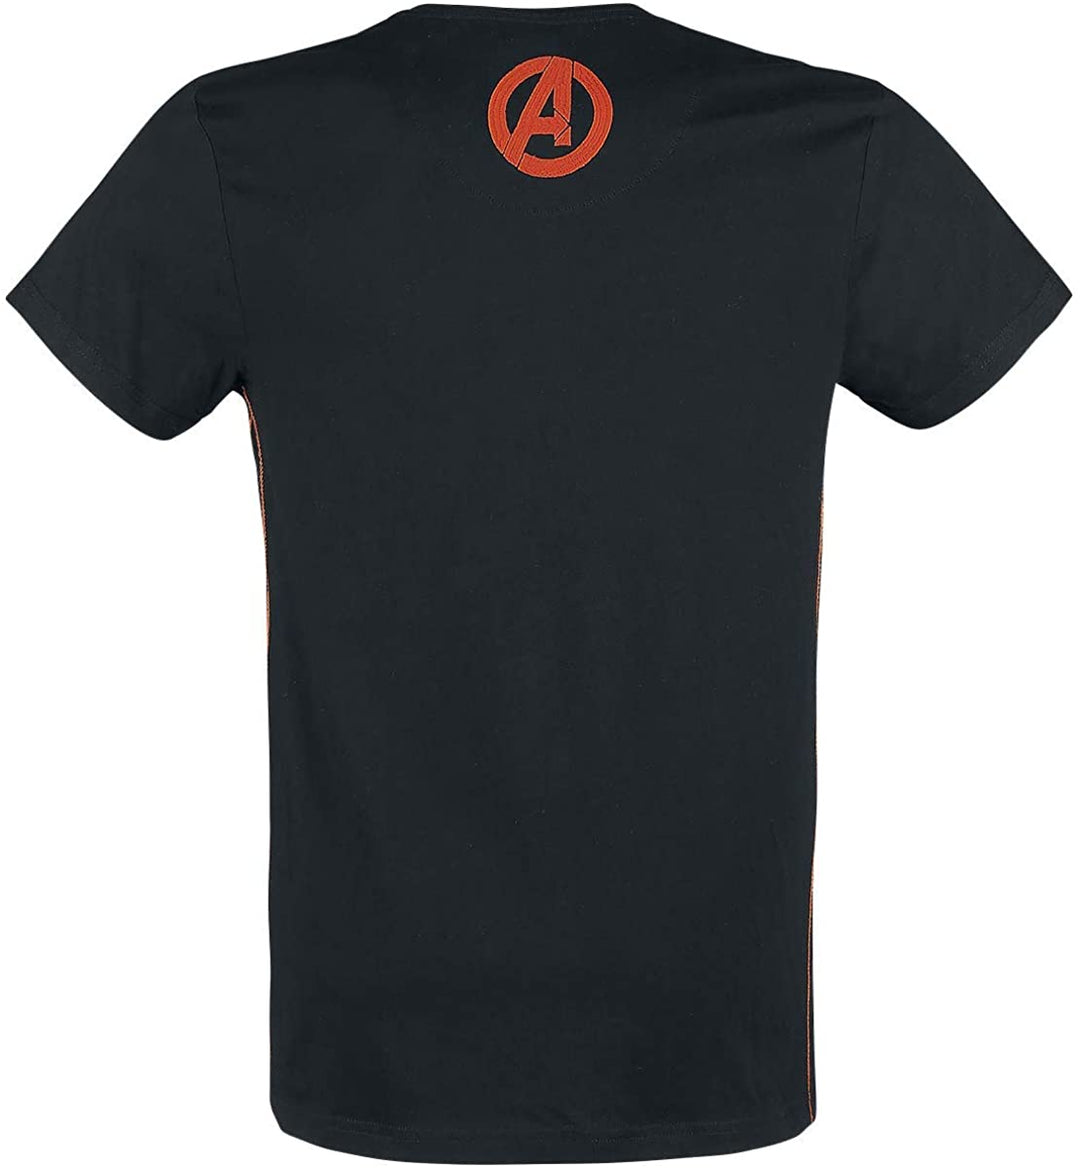 Avengers Endgame - Constructivism Poster T-Shirt Black S